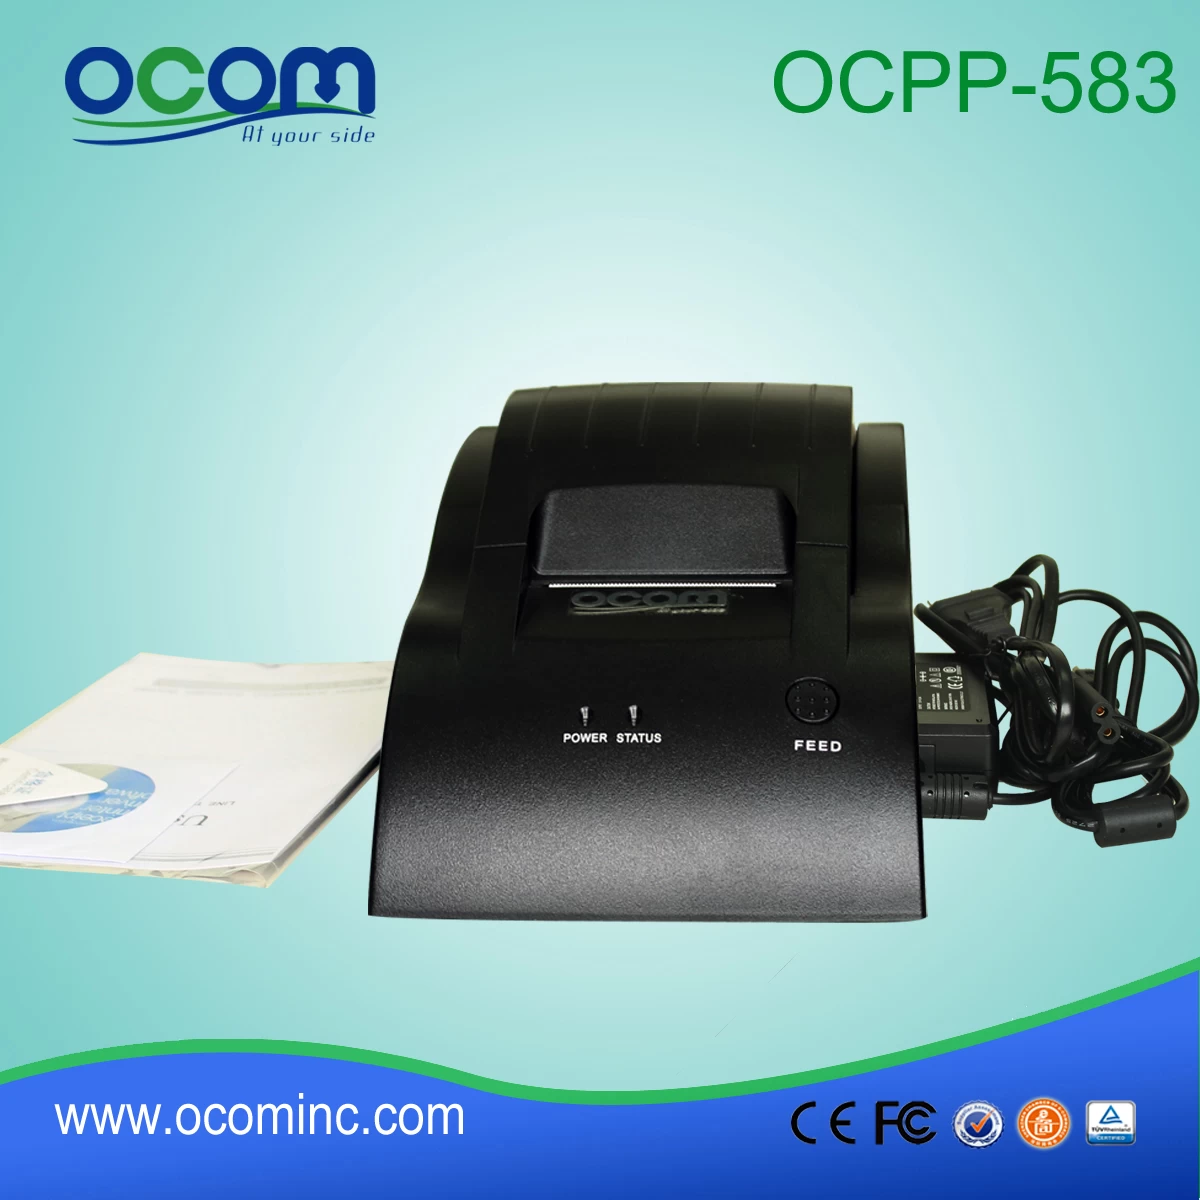 (OCPP-583) 58mm High quality Thermal Printer